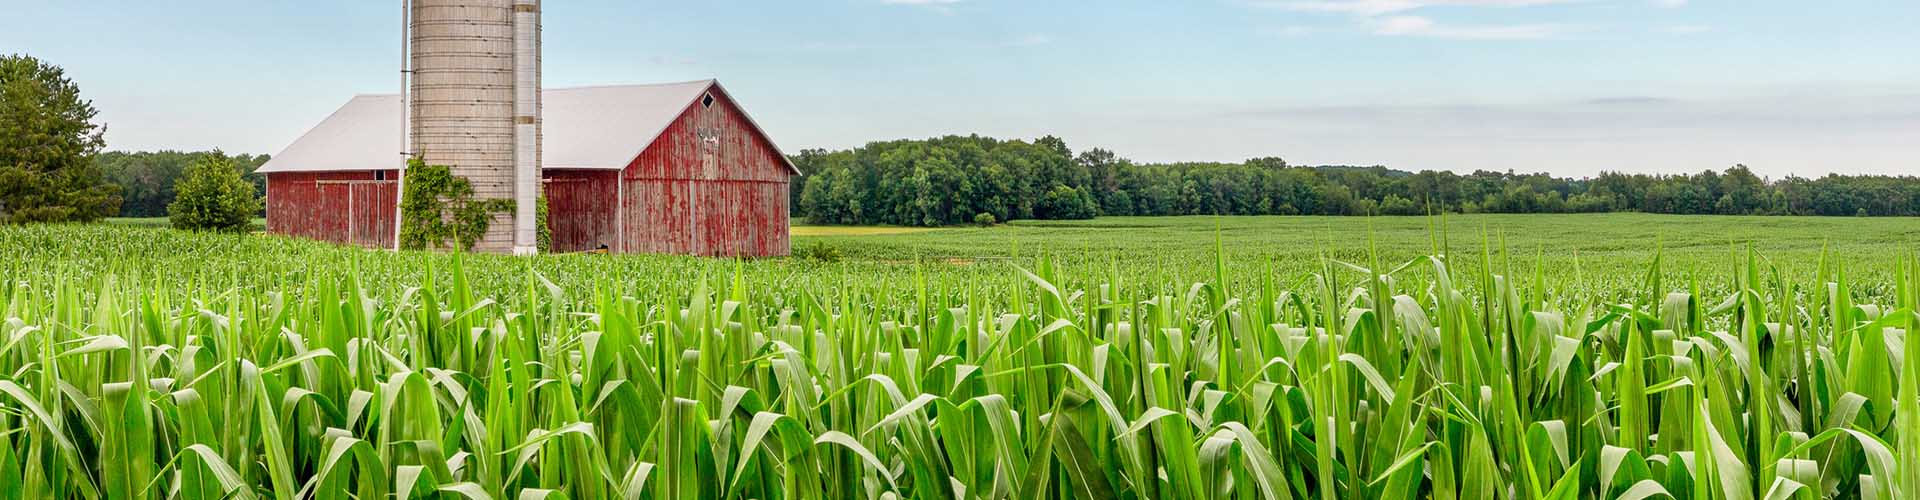 Old barn, silo, and corn field scene